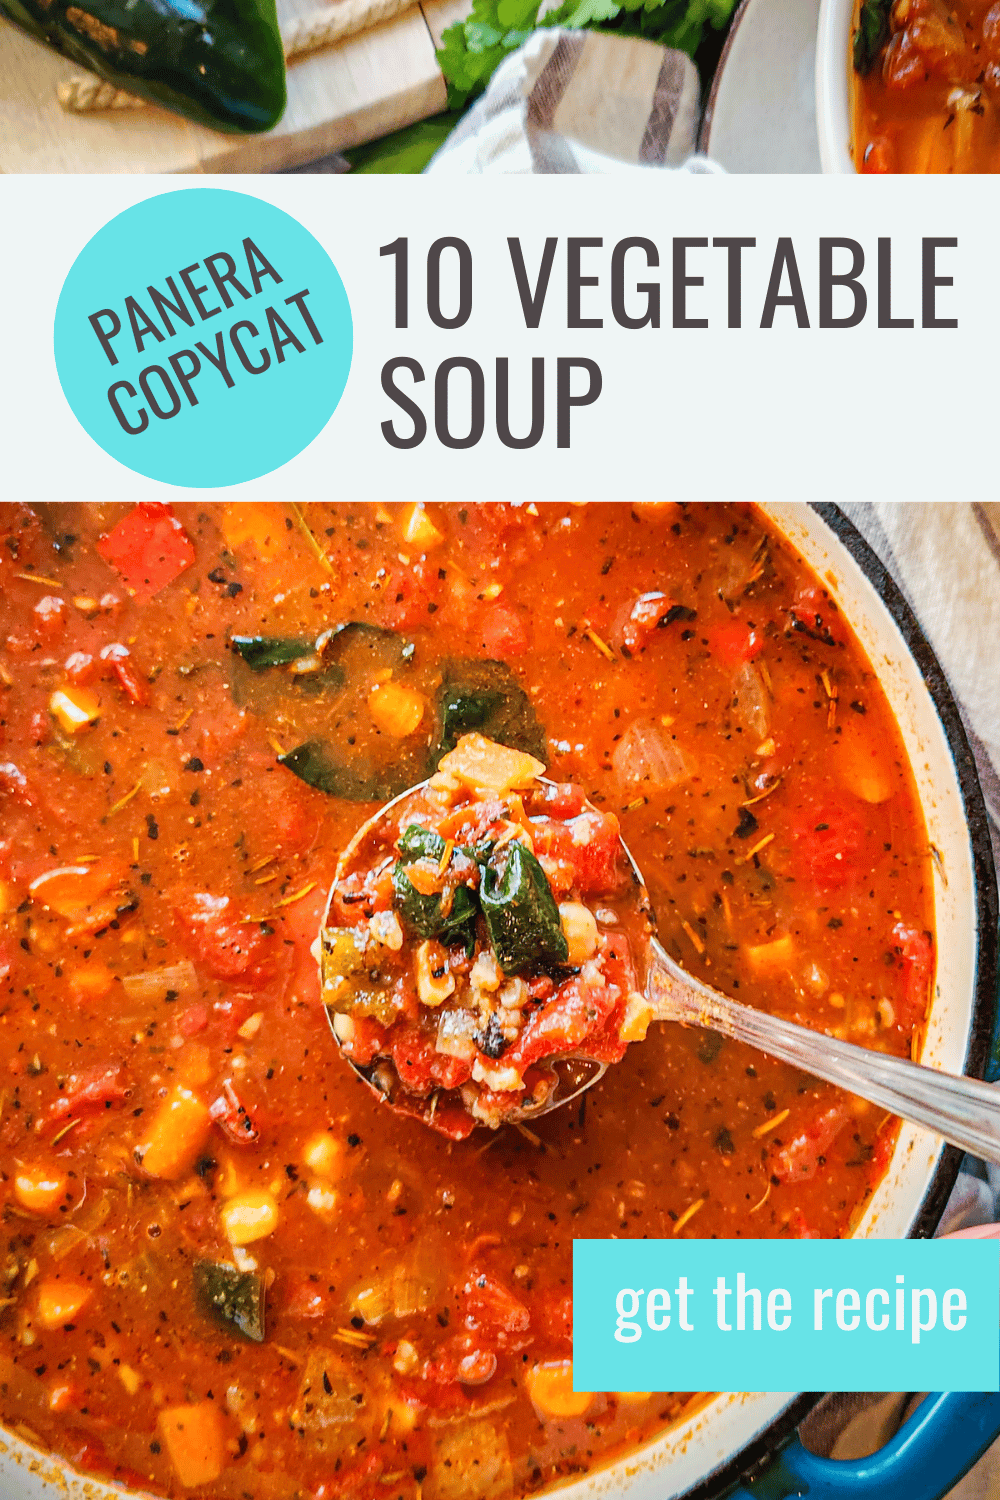 Copycat Panera Bread 10 Vegetable Soup · Seasonal Cravings